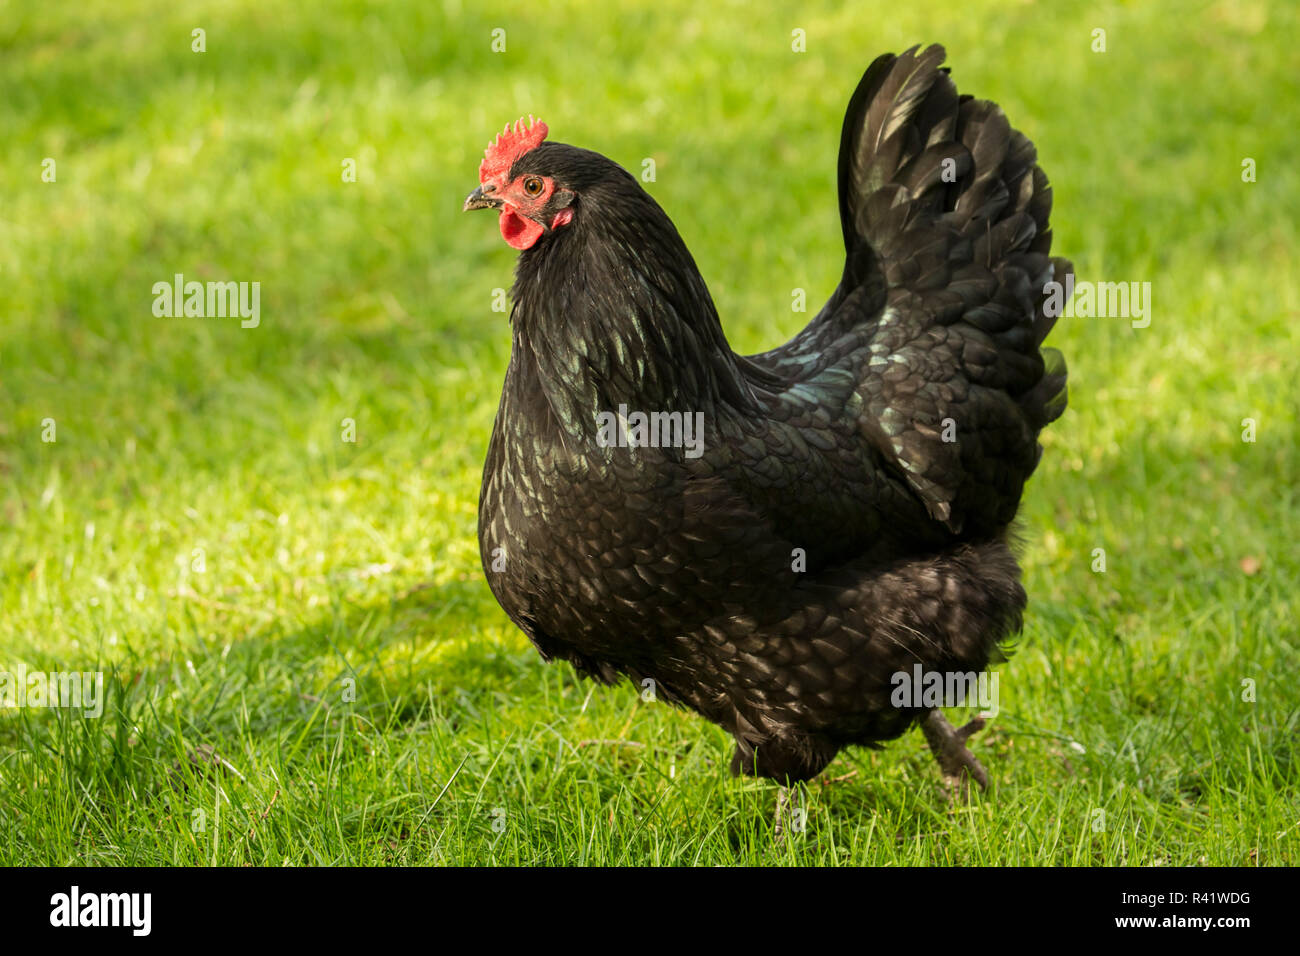 Issaquah, Washington State, USA. Free-ranging Black Australorp chicken. (PR) Stock Photo